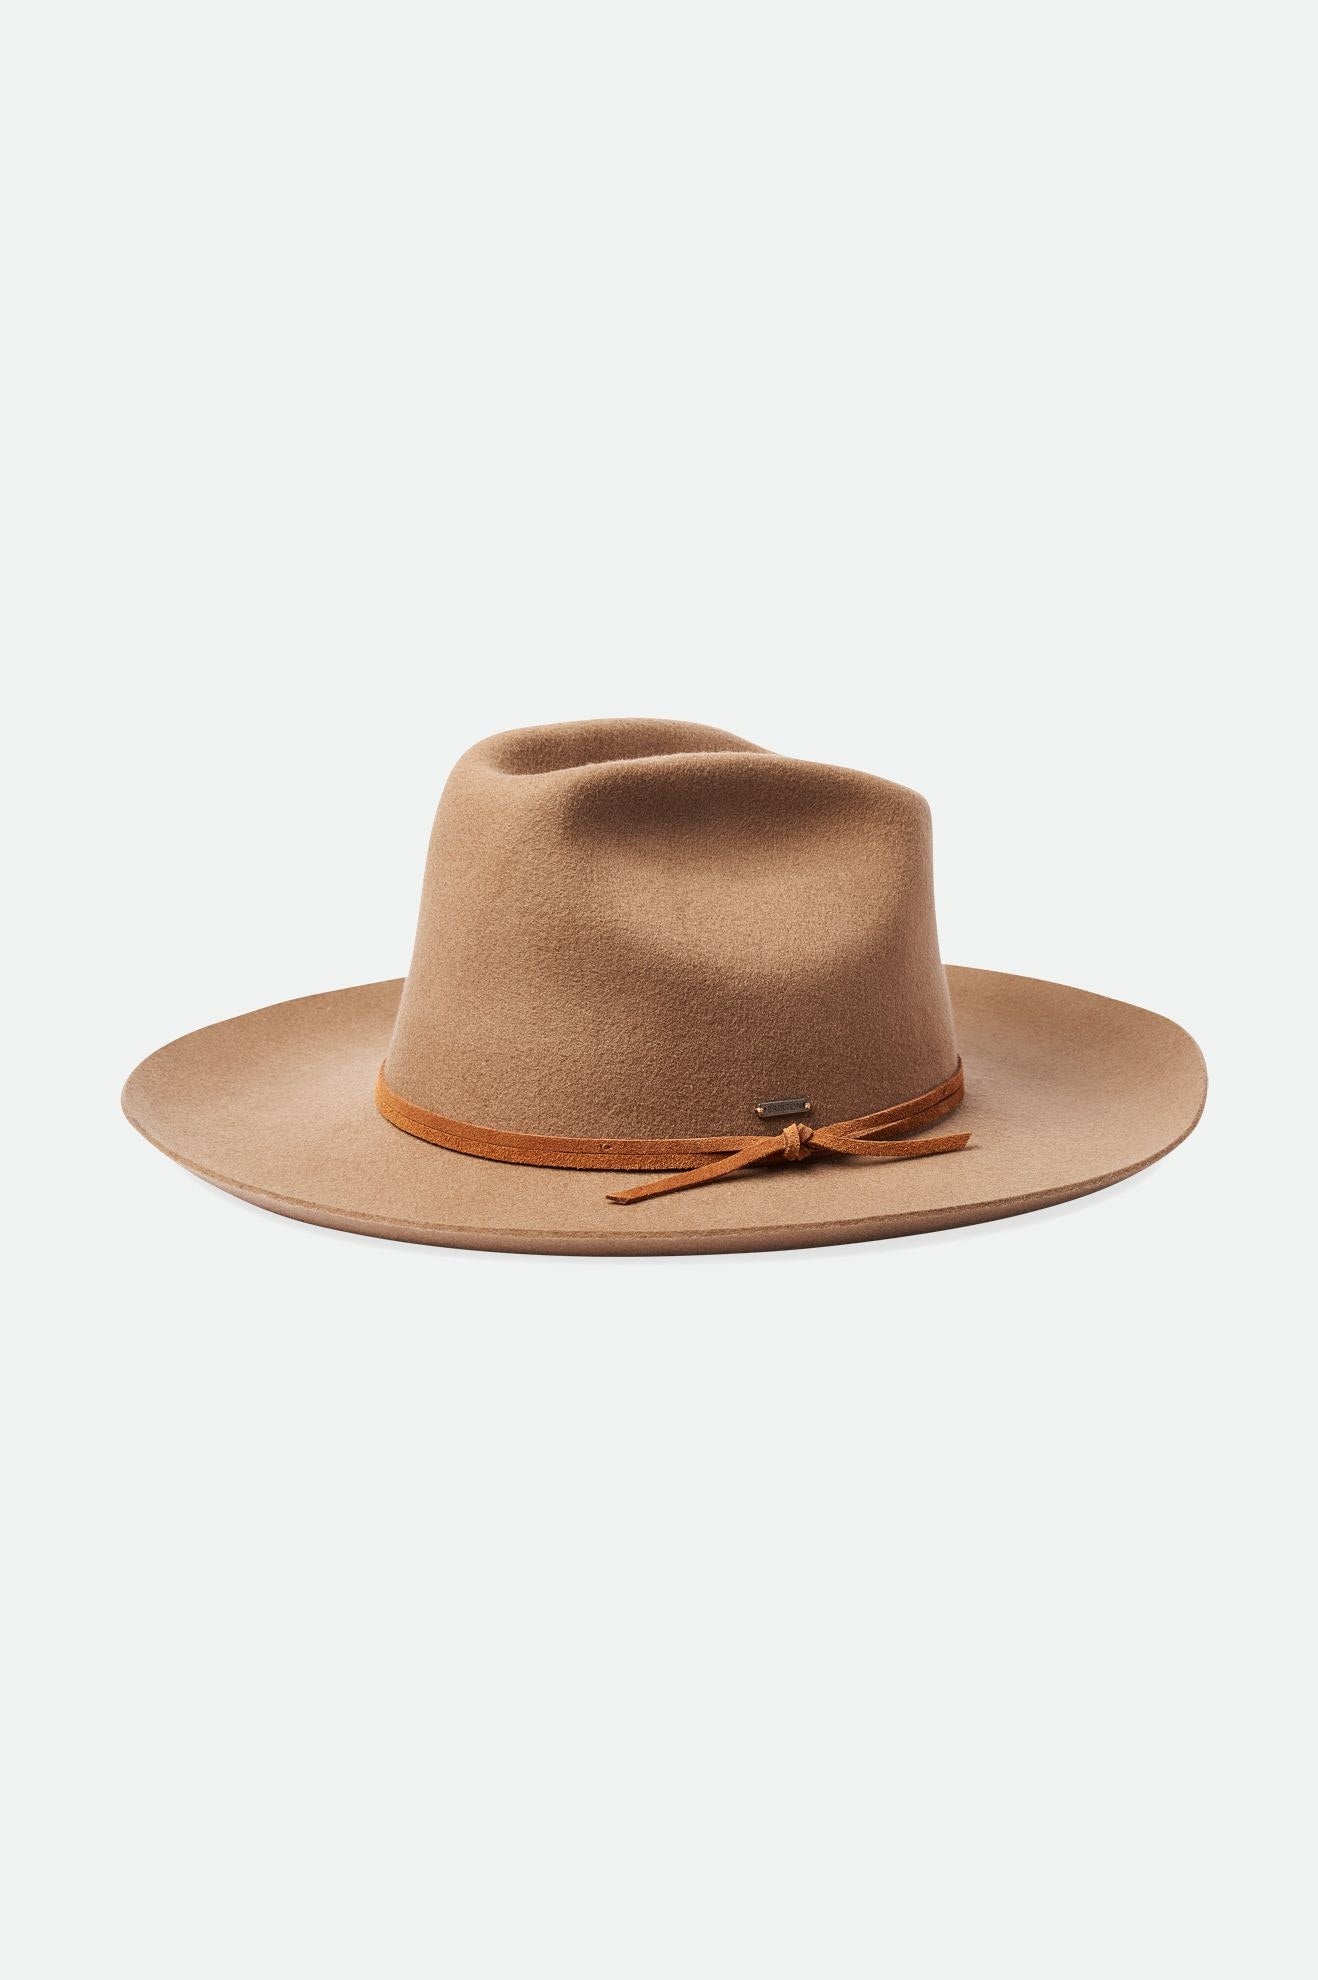 Sedona Reserve Cowboy Hat - Mojave